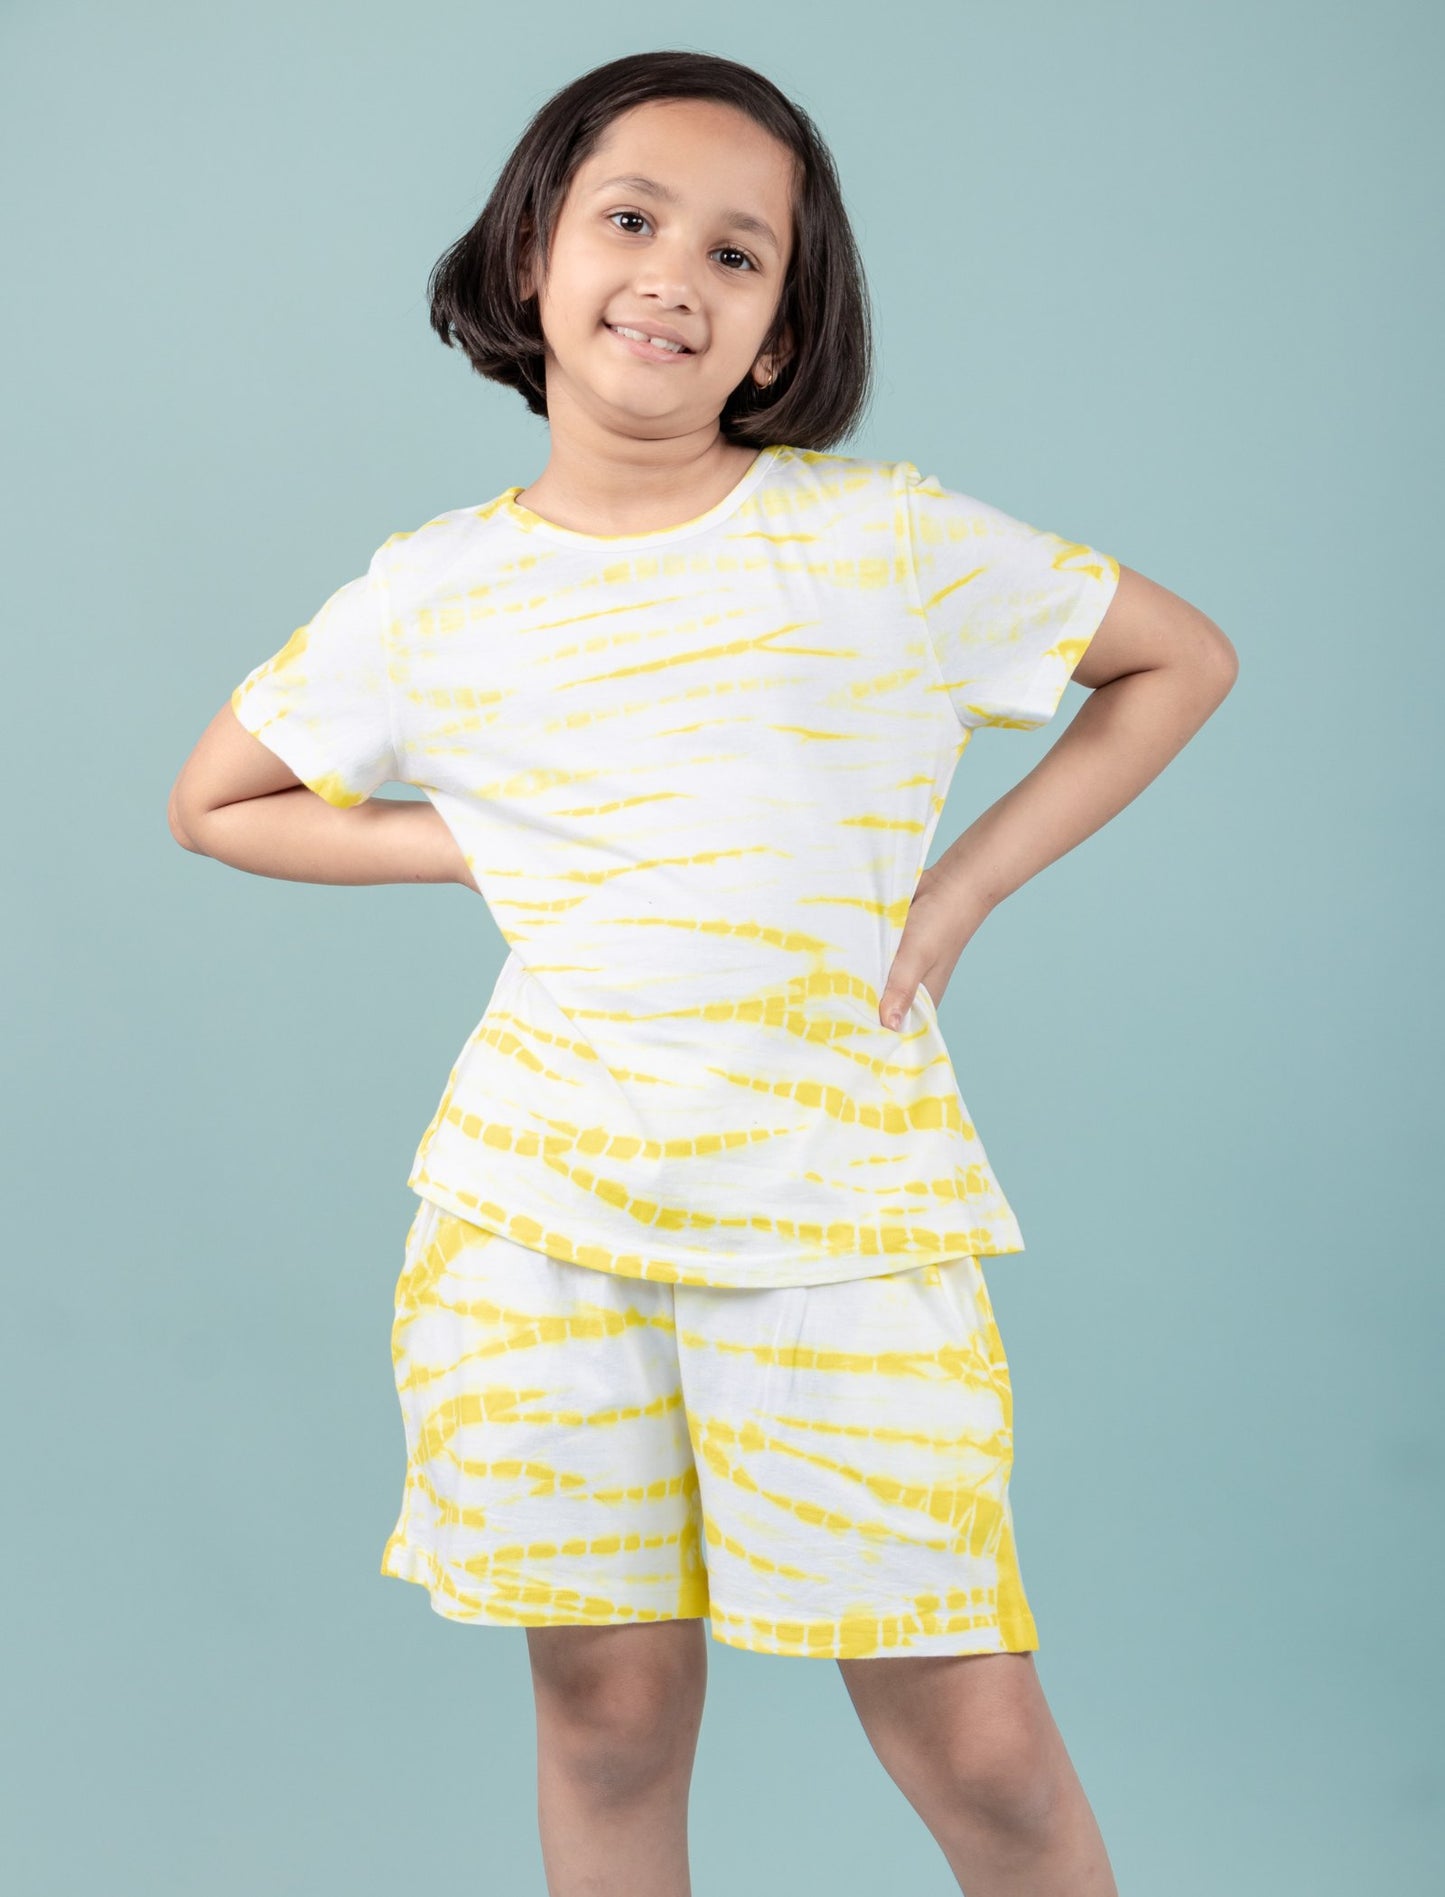 Girls Kids Cotton Tie-Dye T-shirt and Shorts Loungewear Co-ordinate Set (Yellow)